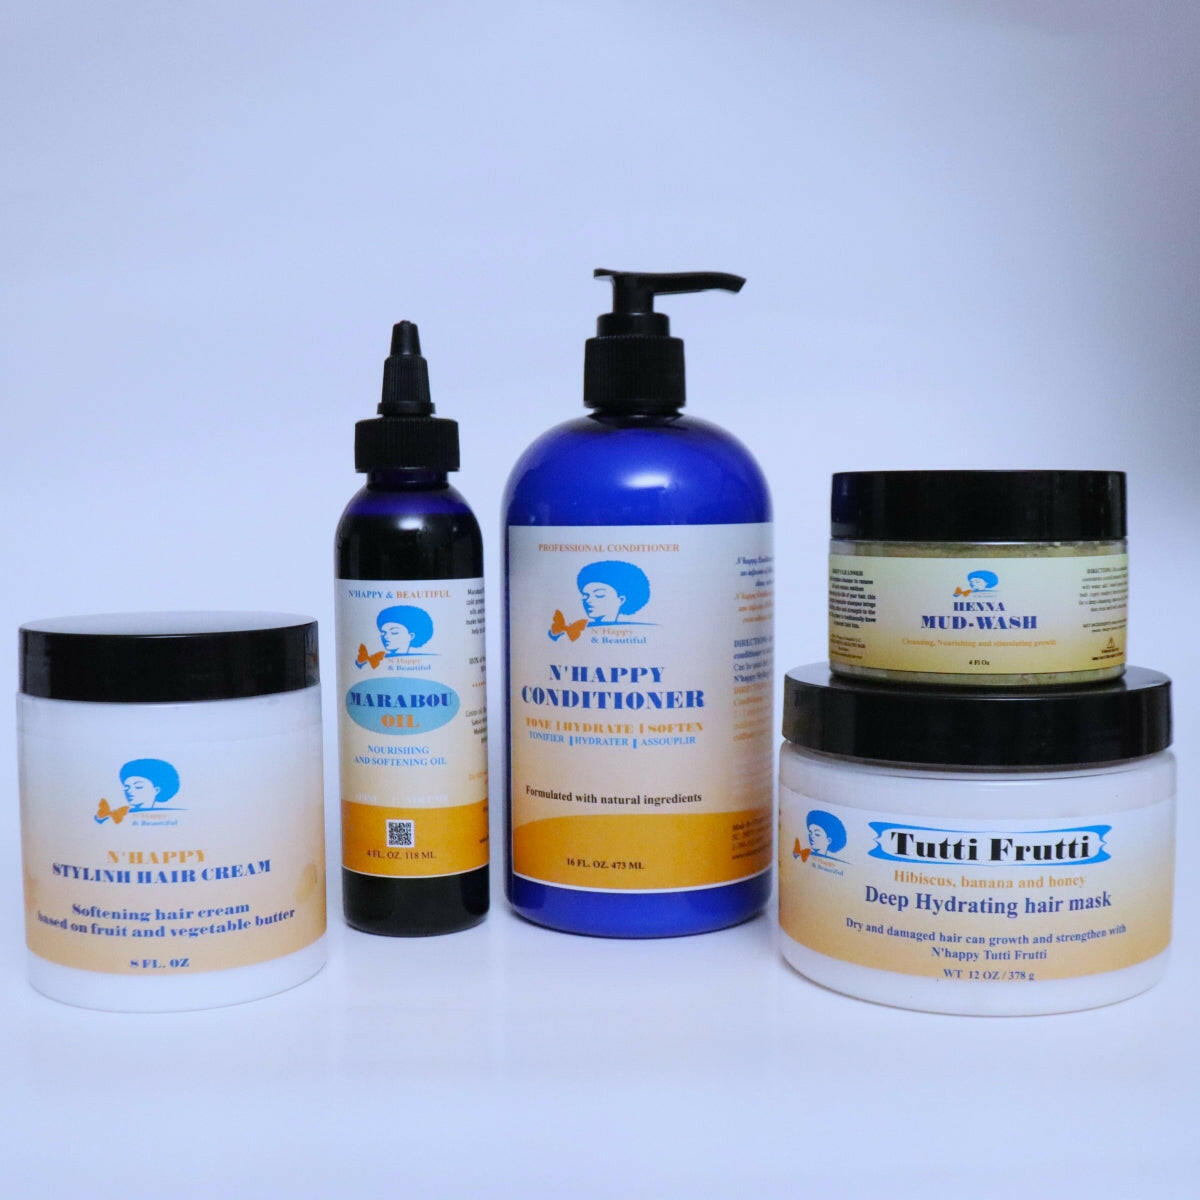 Choublak set /Wholesale / 10 set / 5 Pieces of natural hair care products